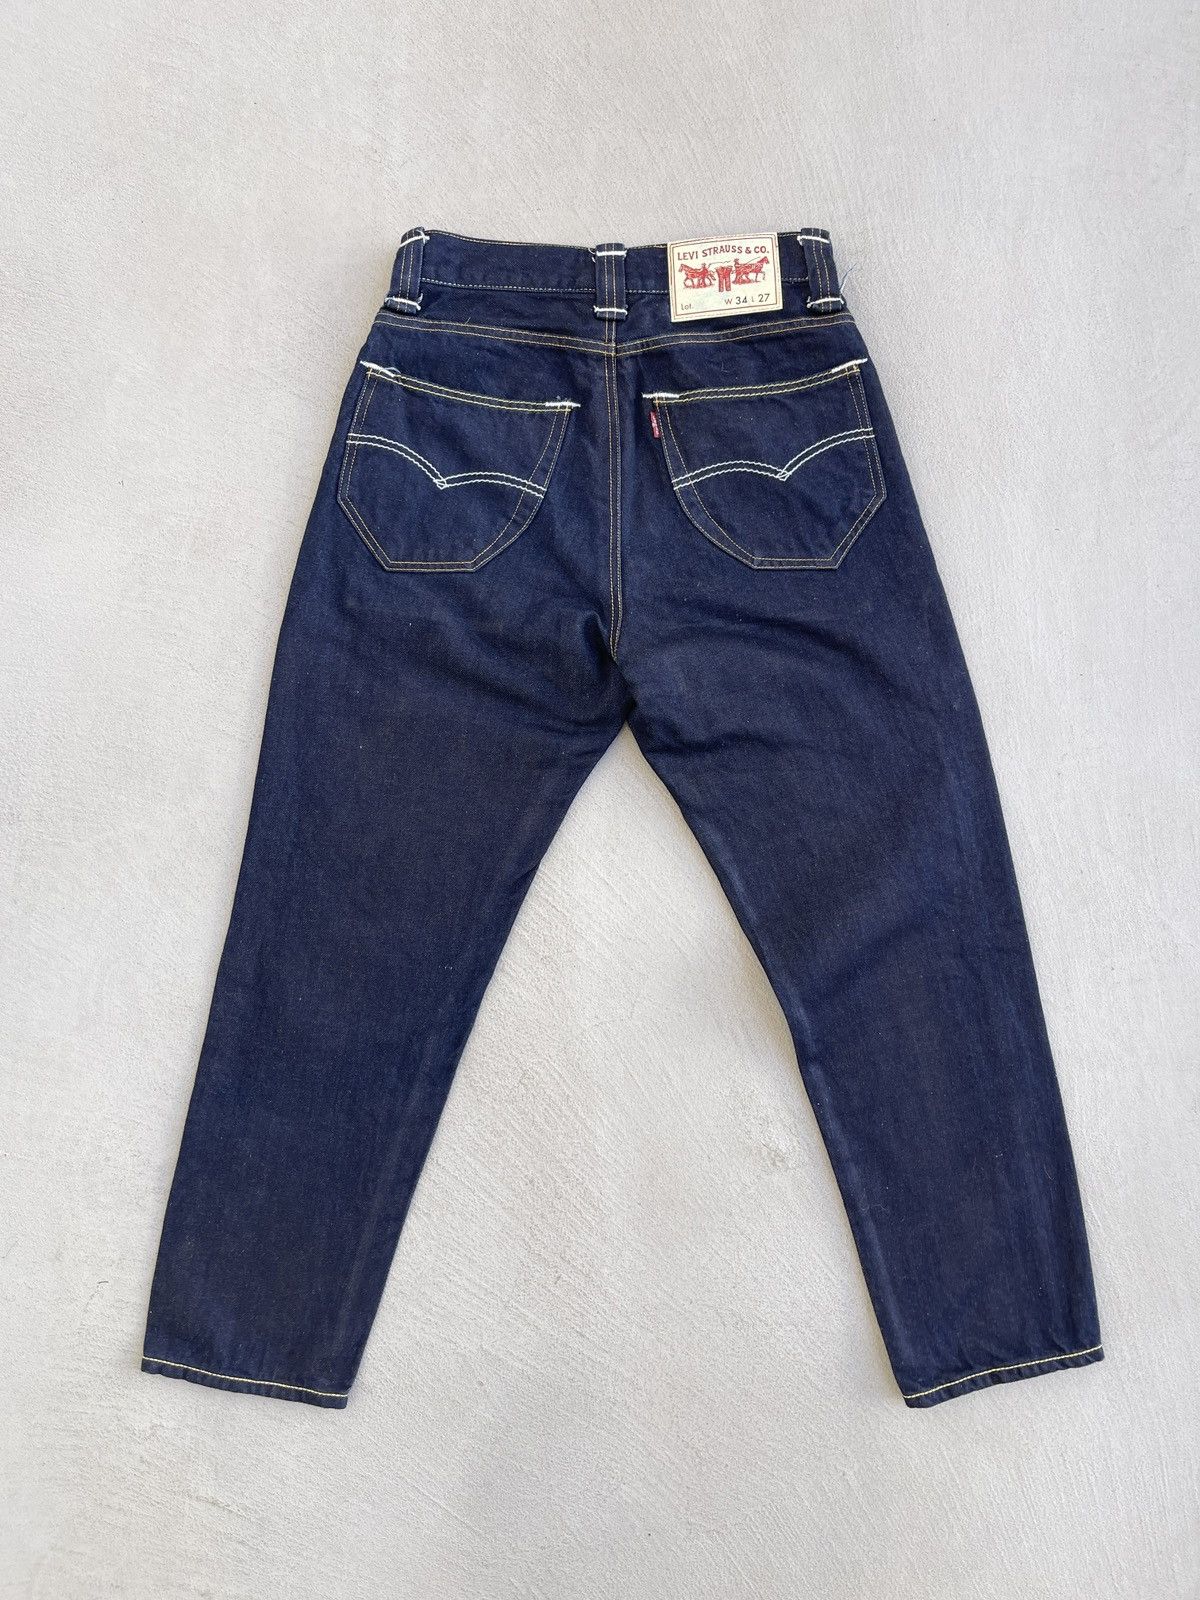 Vintage 2010s Junya Watanabe x Levi's Cropped Jeans - 6